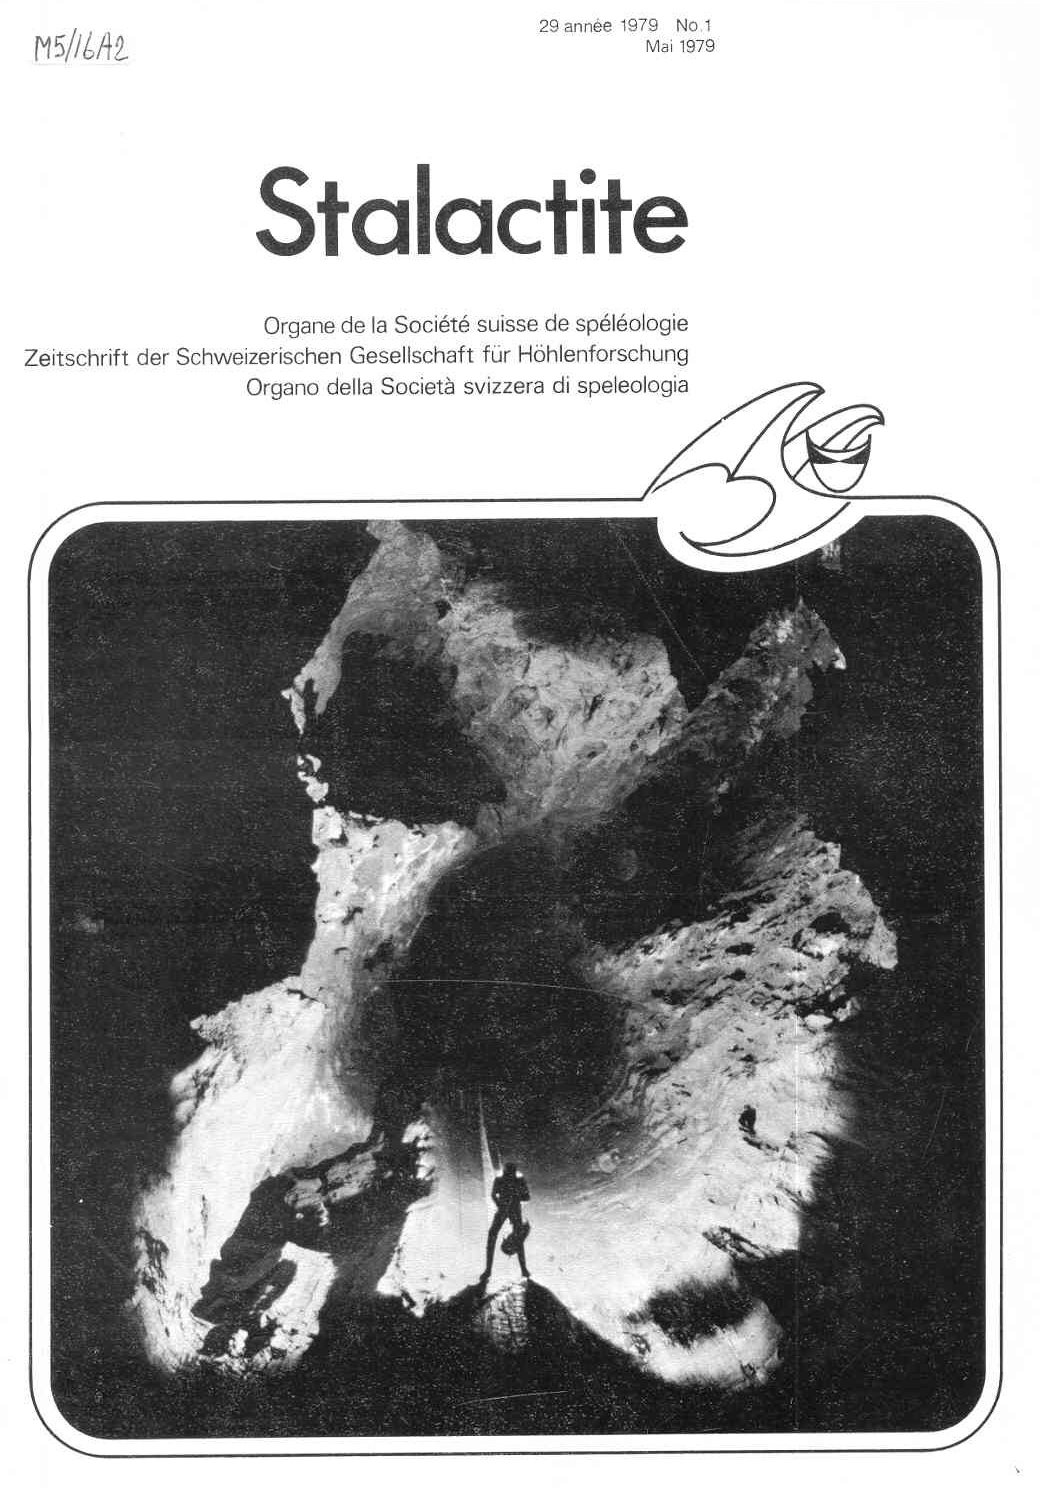 copertina anno 1979 n°1.jpg